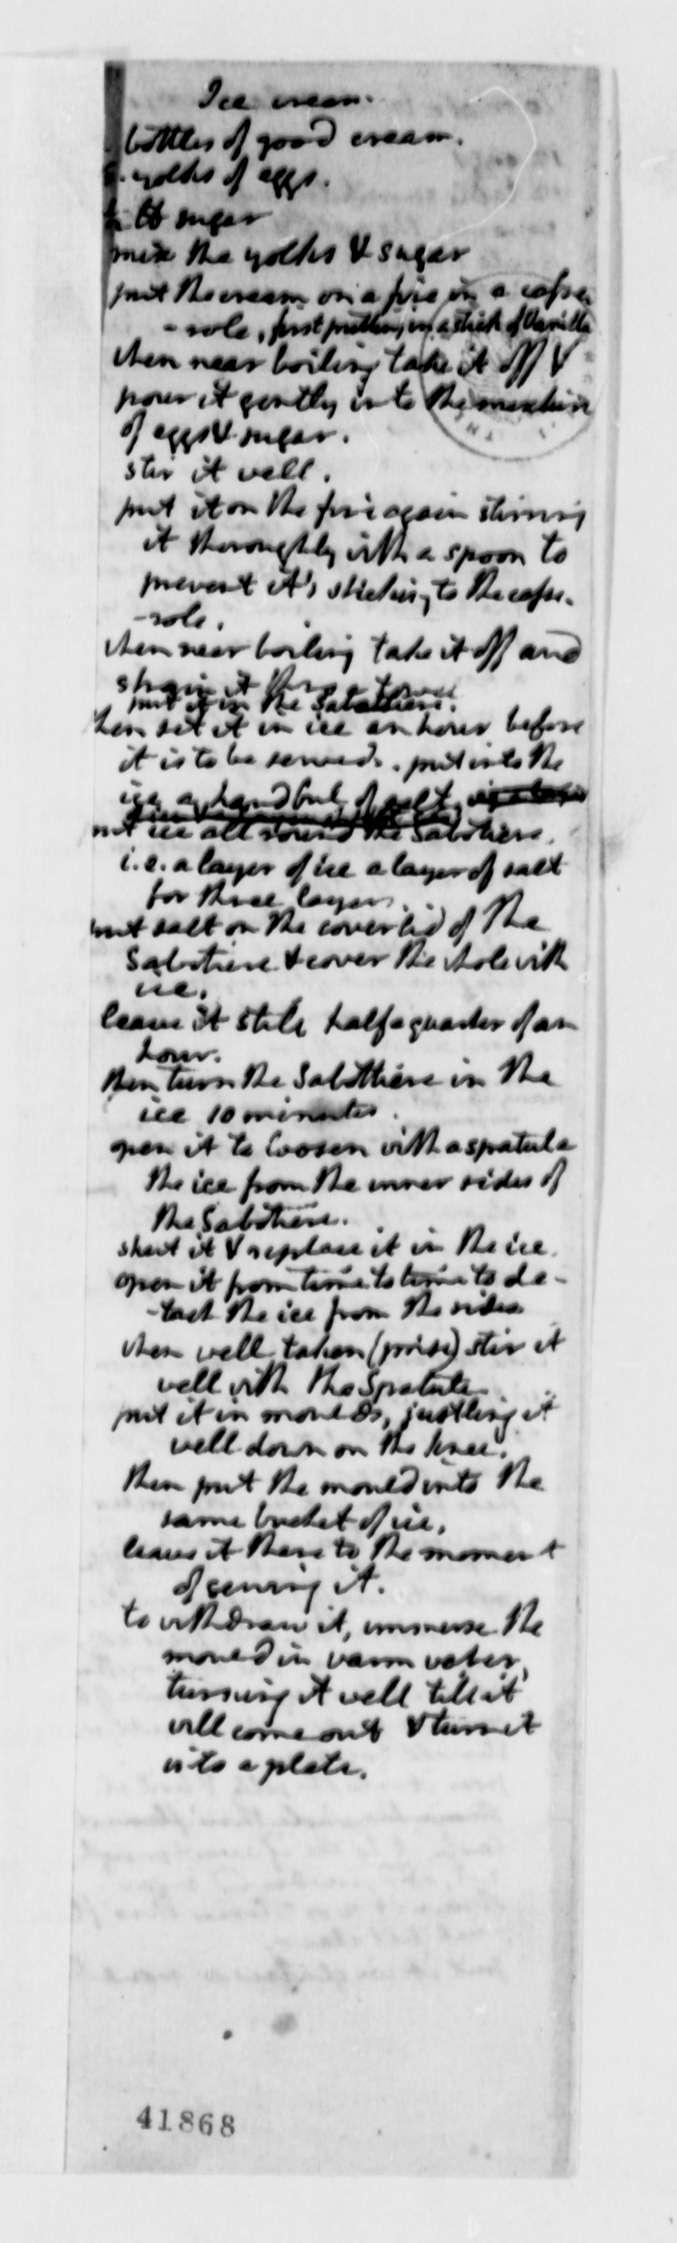 Thomas Jefferson's ice cream recipe. (Library of Congress, Manuscript Division)